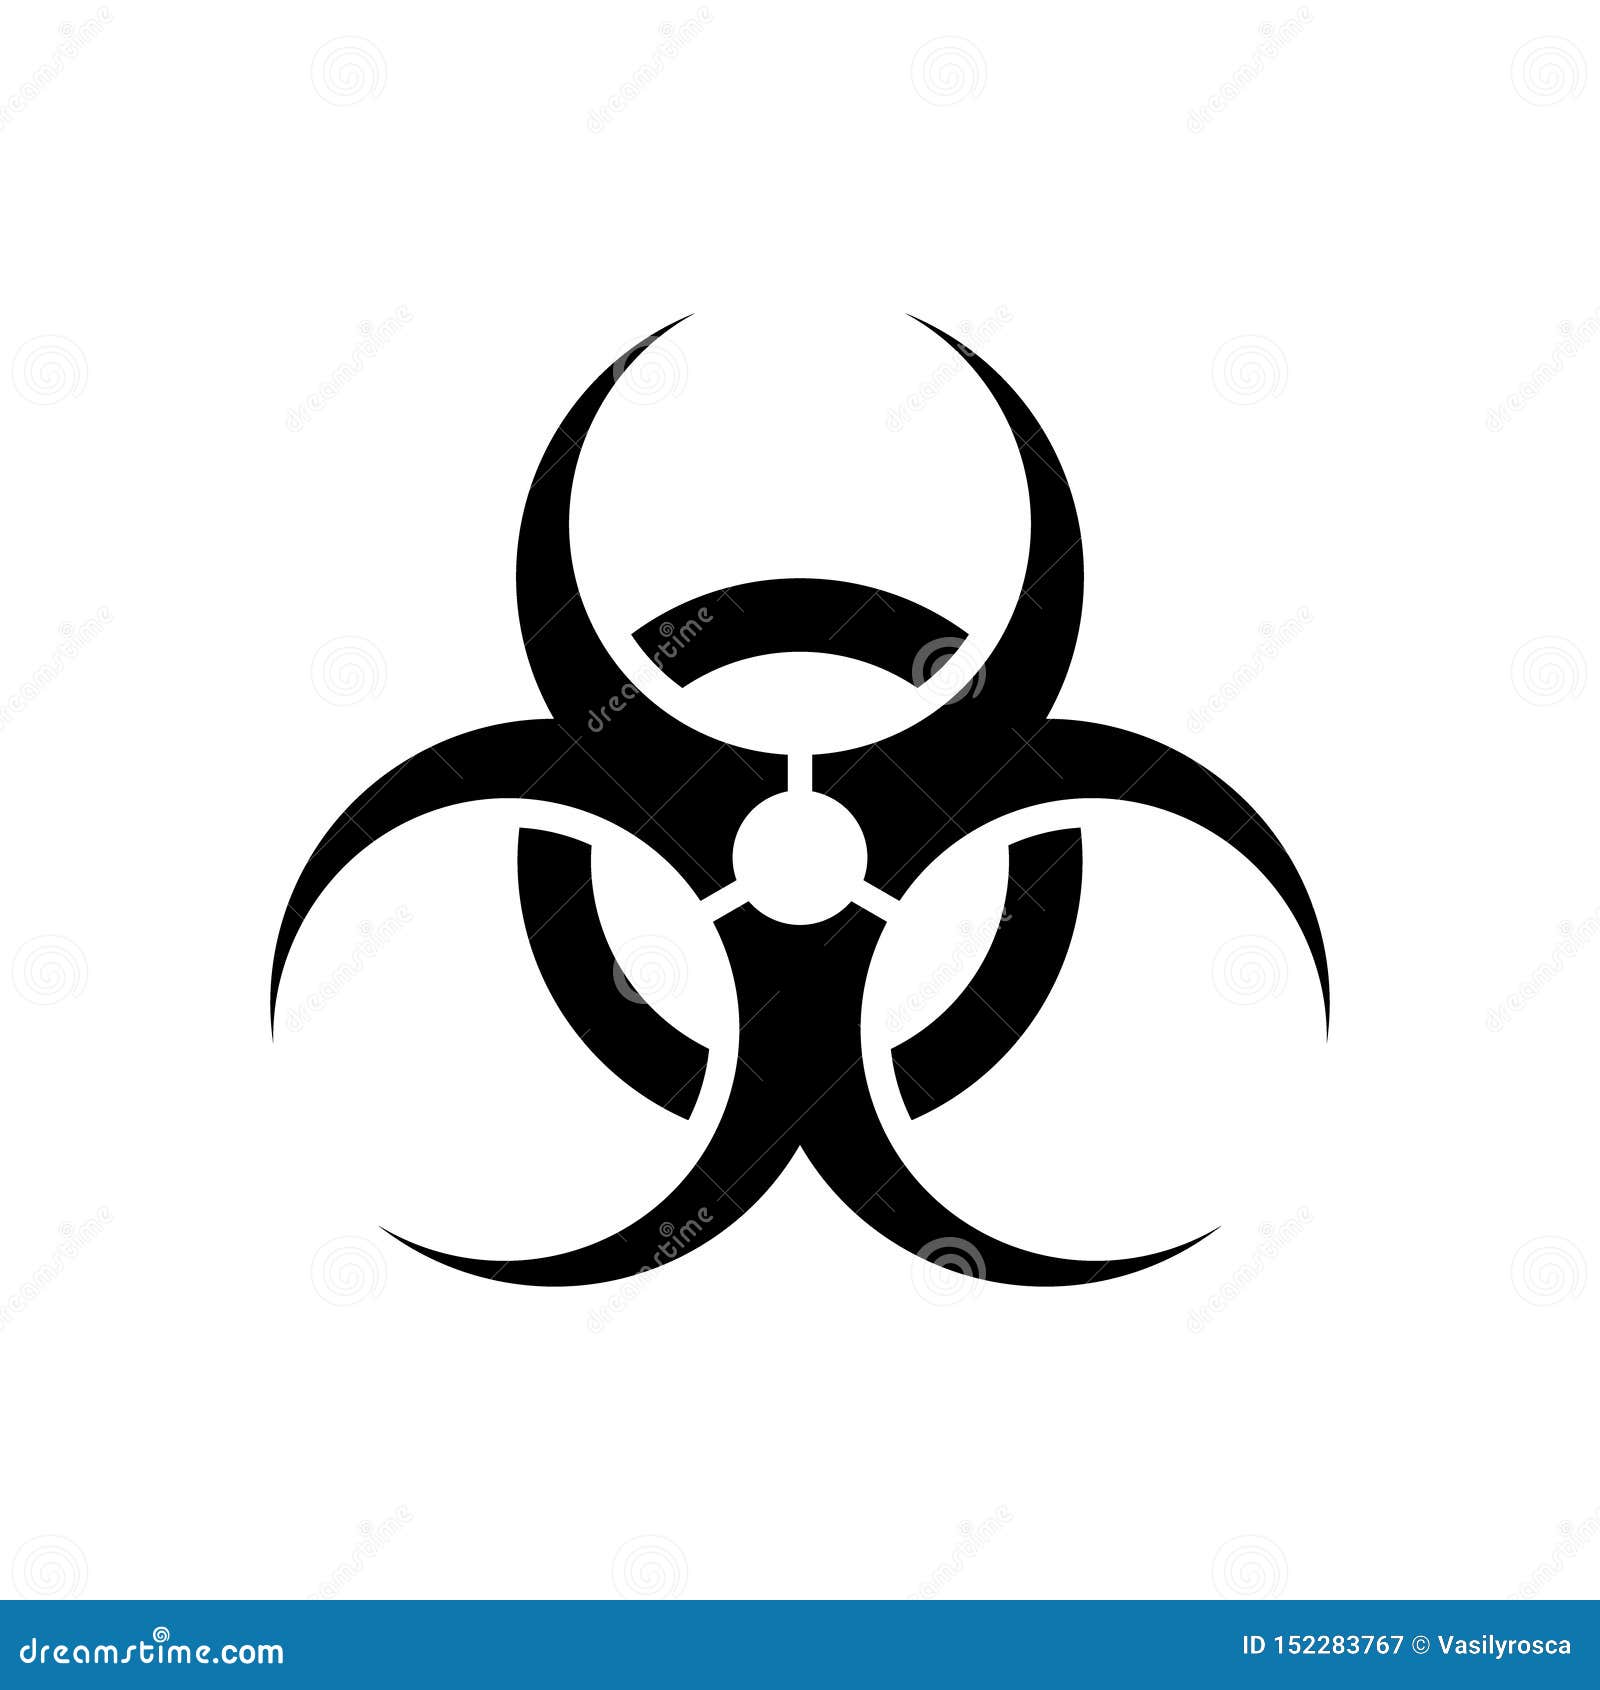 bio hazard sign caution. biological danger toxic , virus risk, biohazard alert